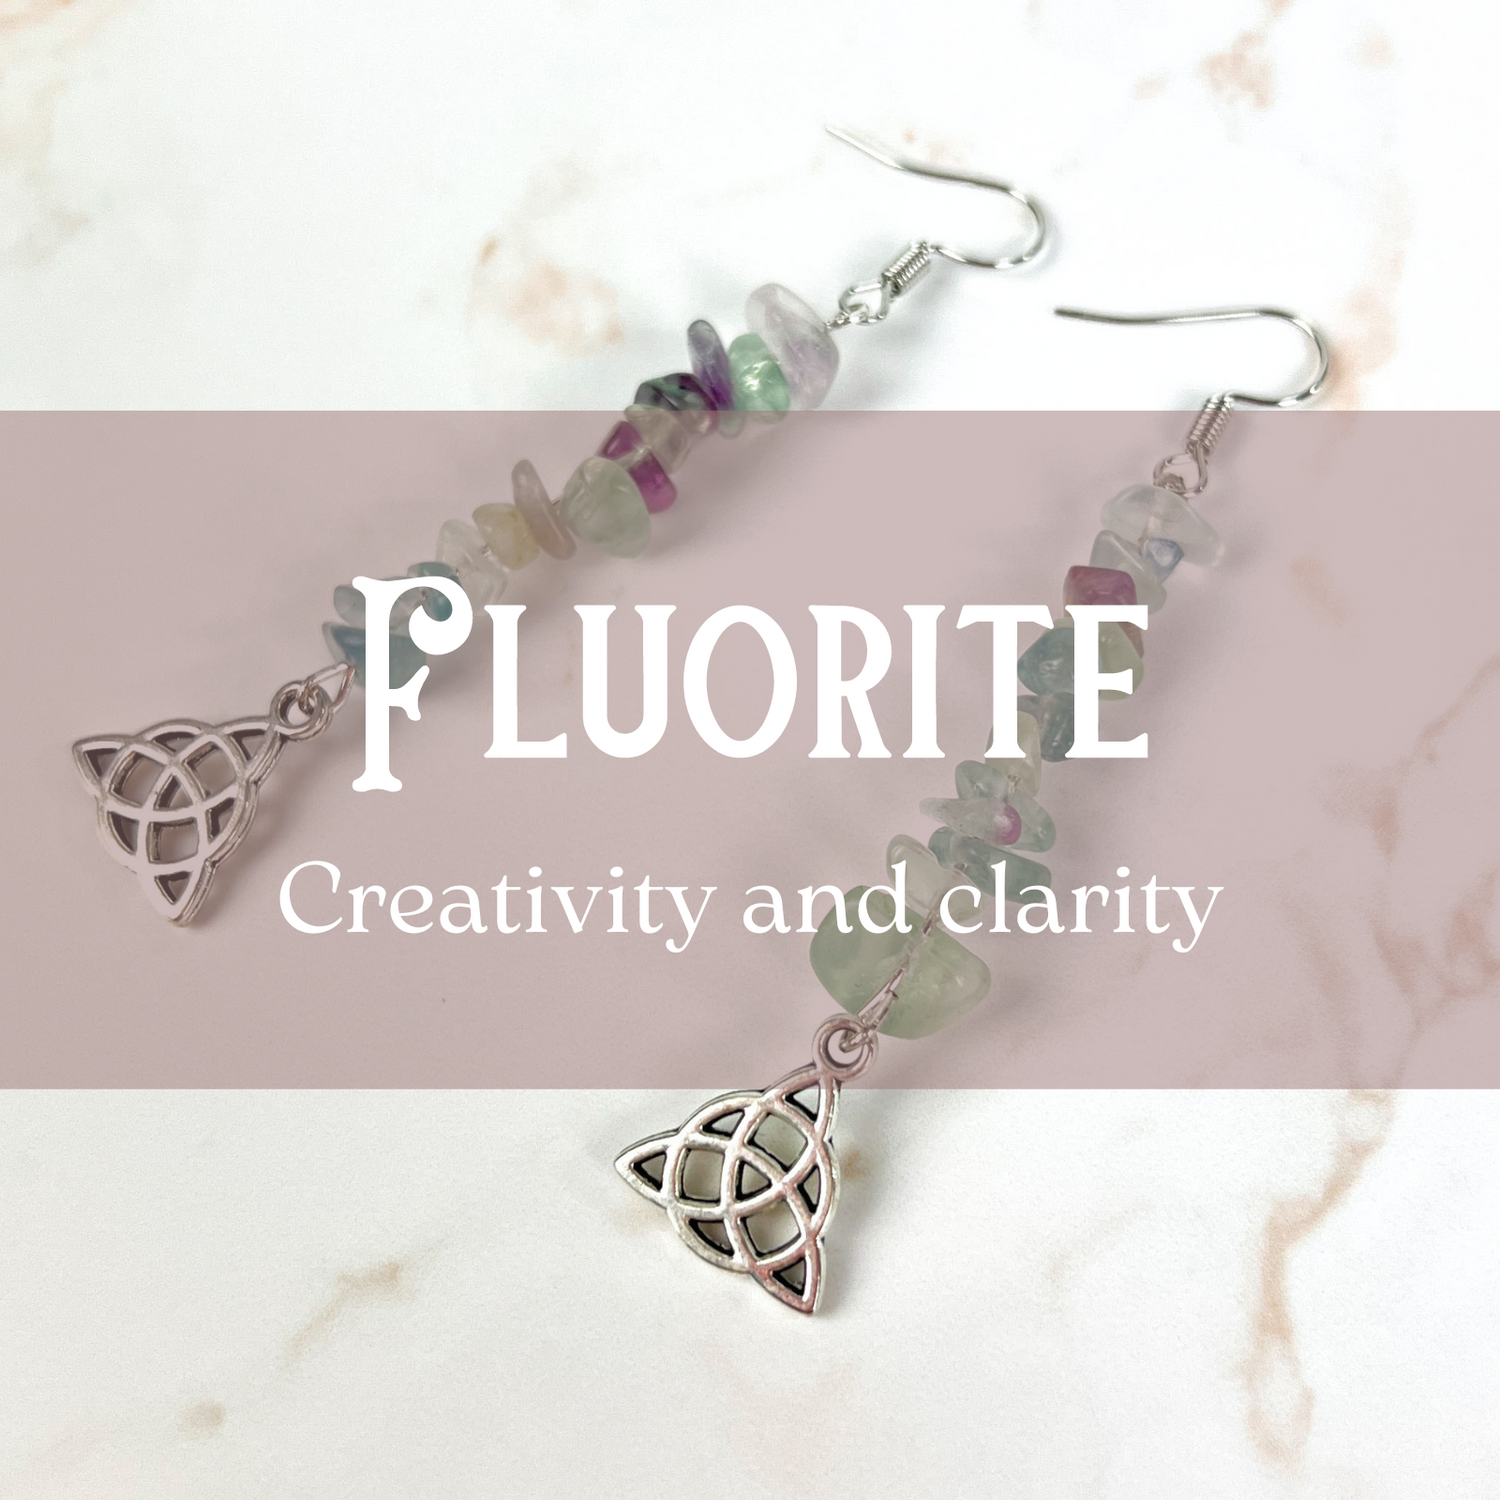 Fluorite jewelry